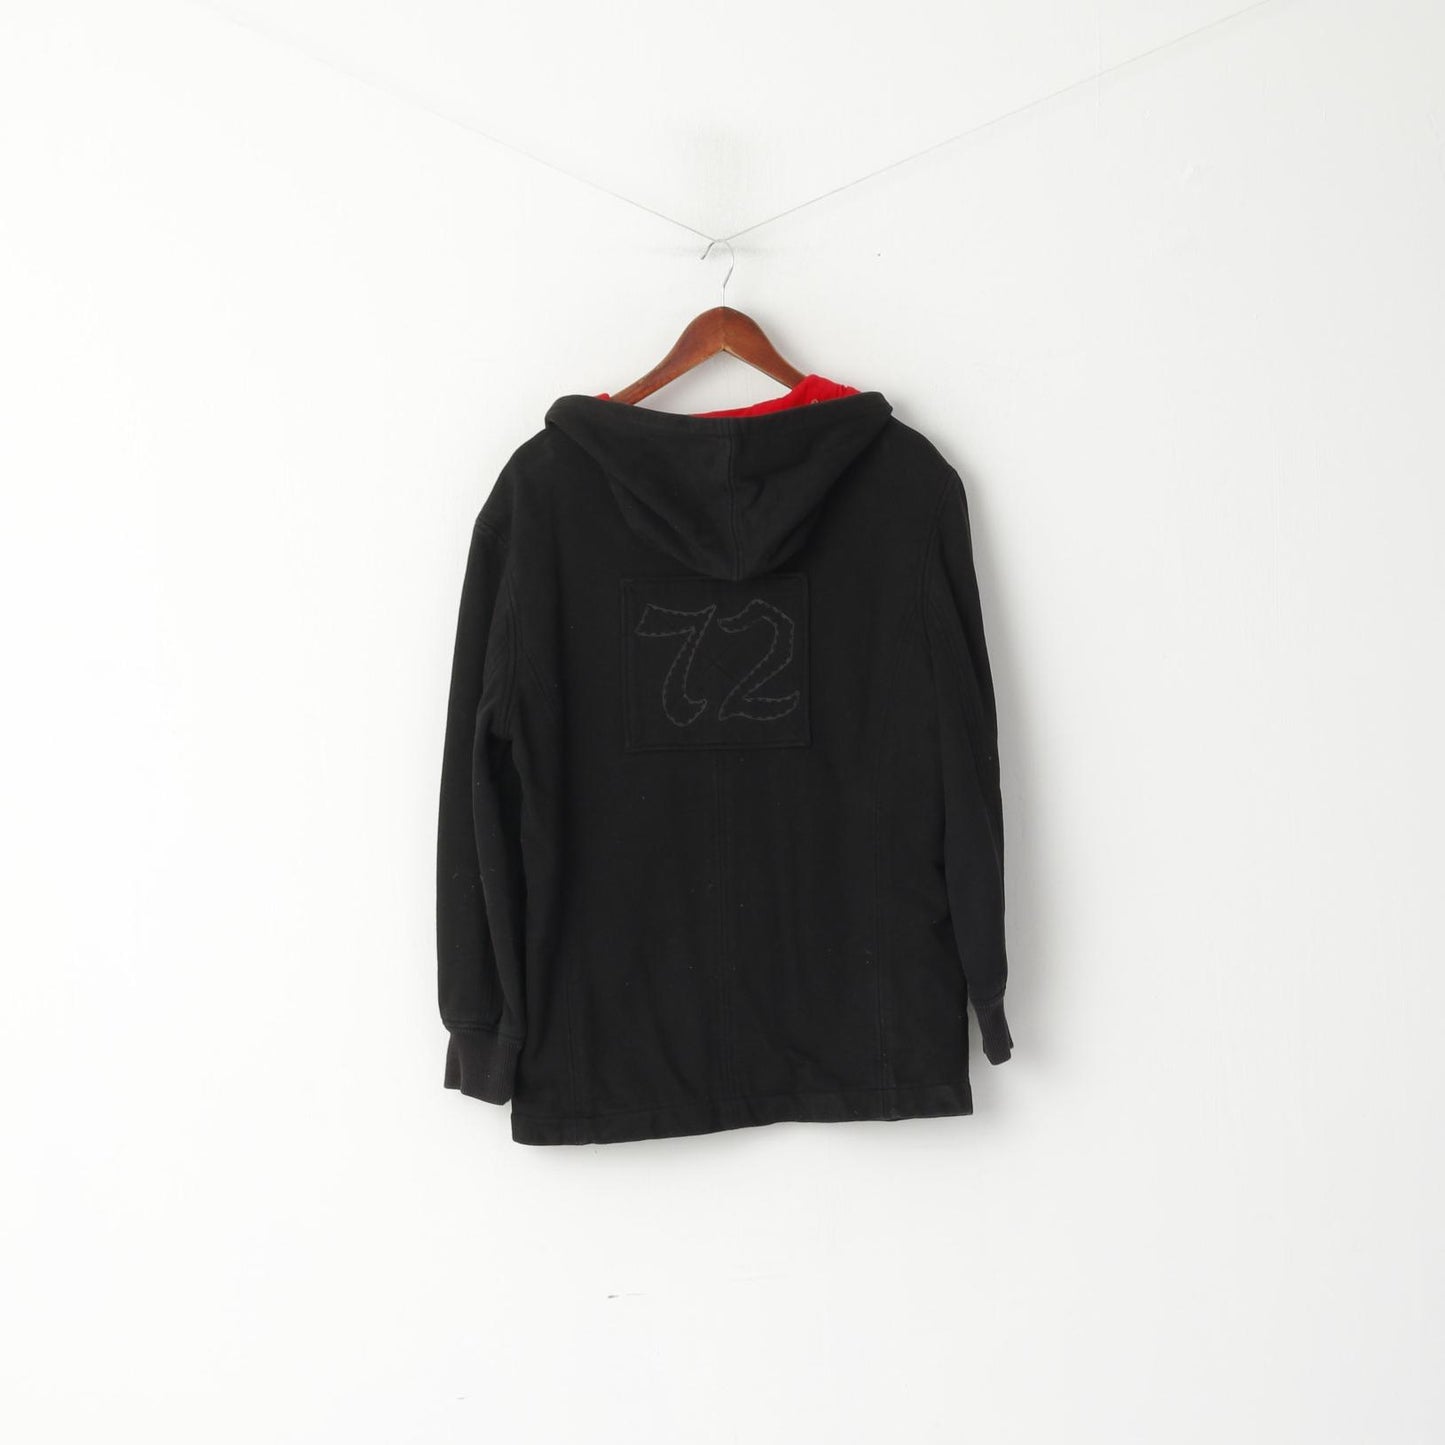 Ecko Unltd. Men S Sweatshirt Black Cotton Detailed Hooded Button Front Top